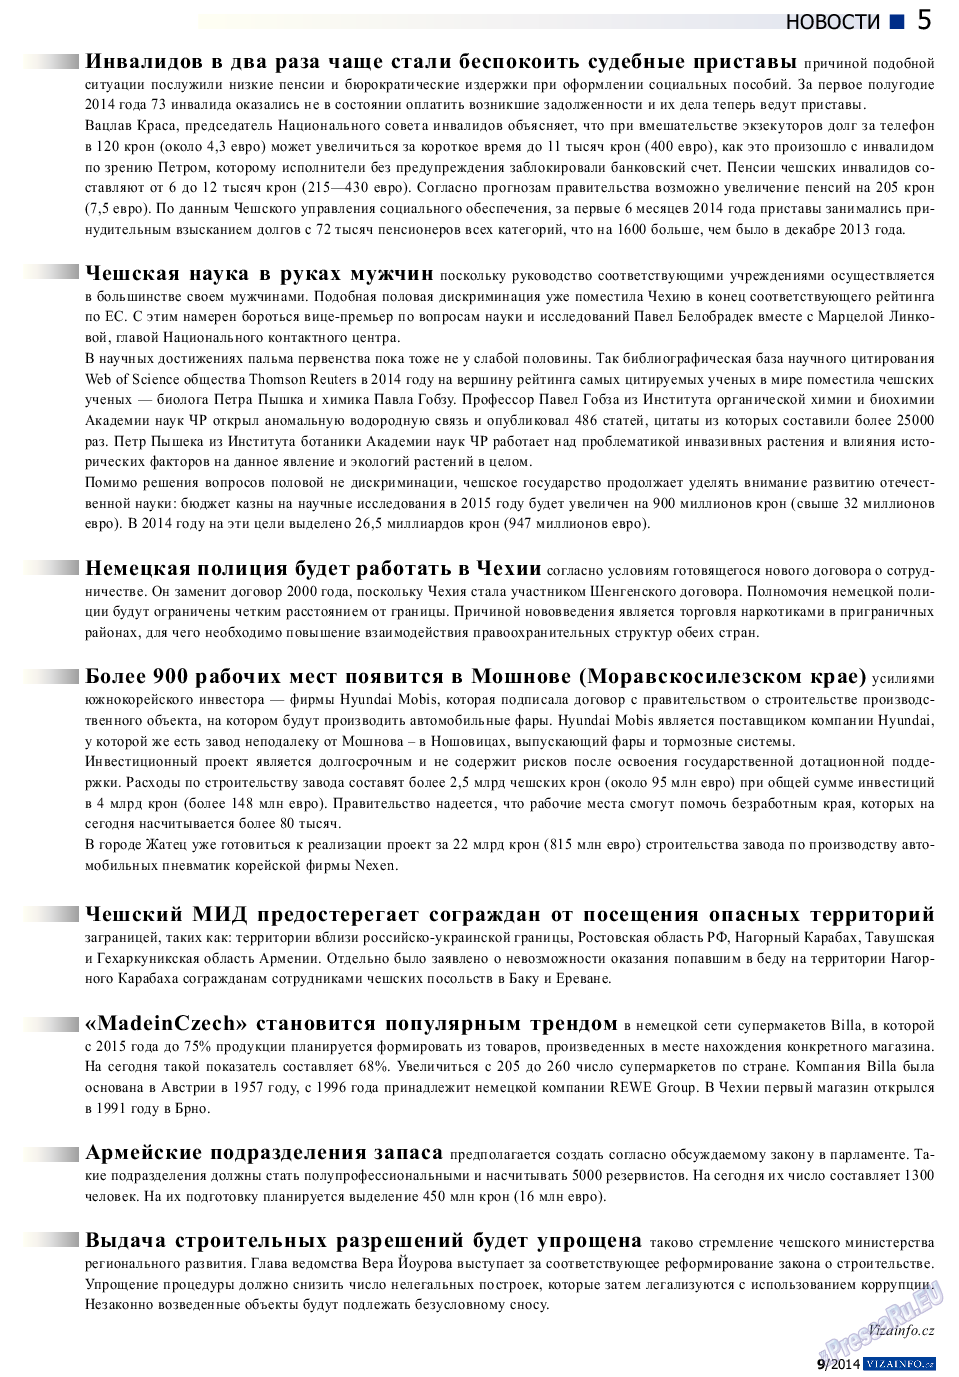 Vizainfo.cz, газета. 2014 №60 стр.5